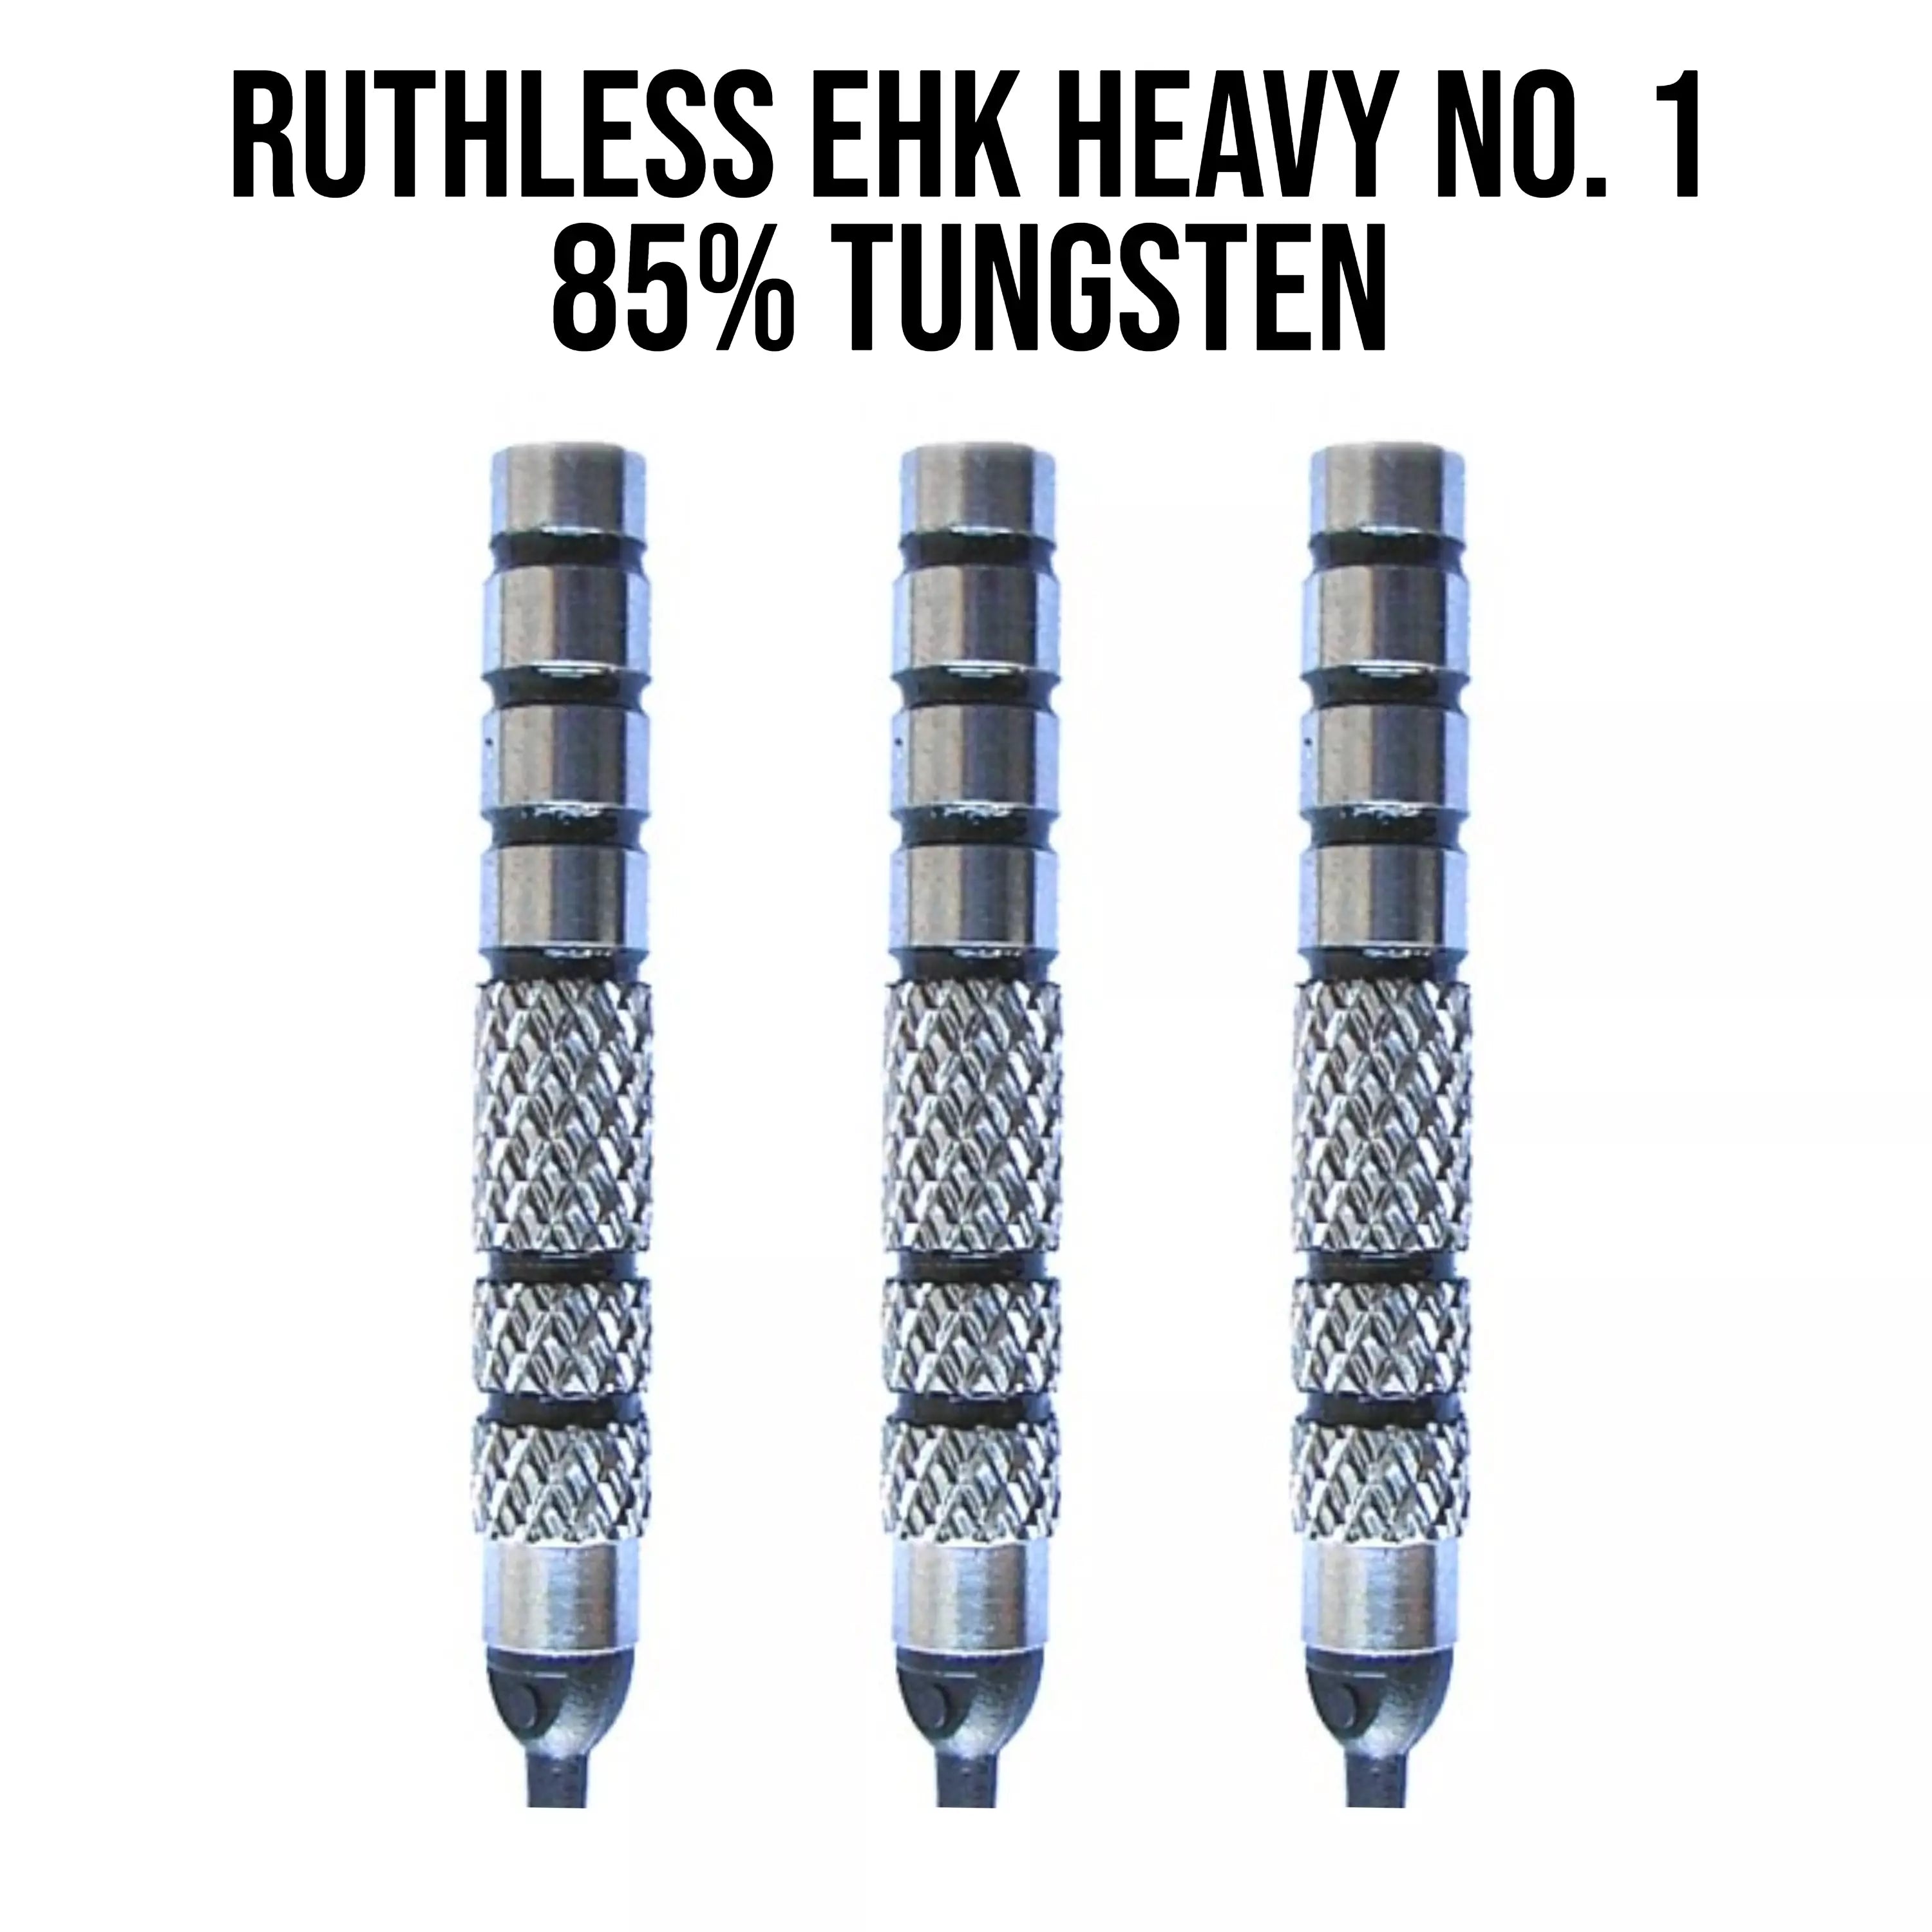 Ruthless EHK Heavy No 1 - 85% Tungsten Softdartbarrels